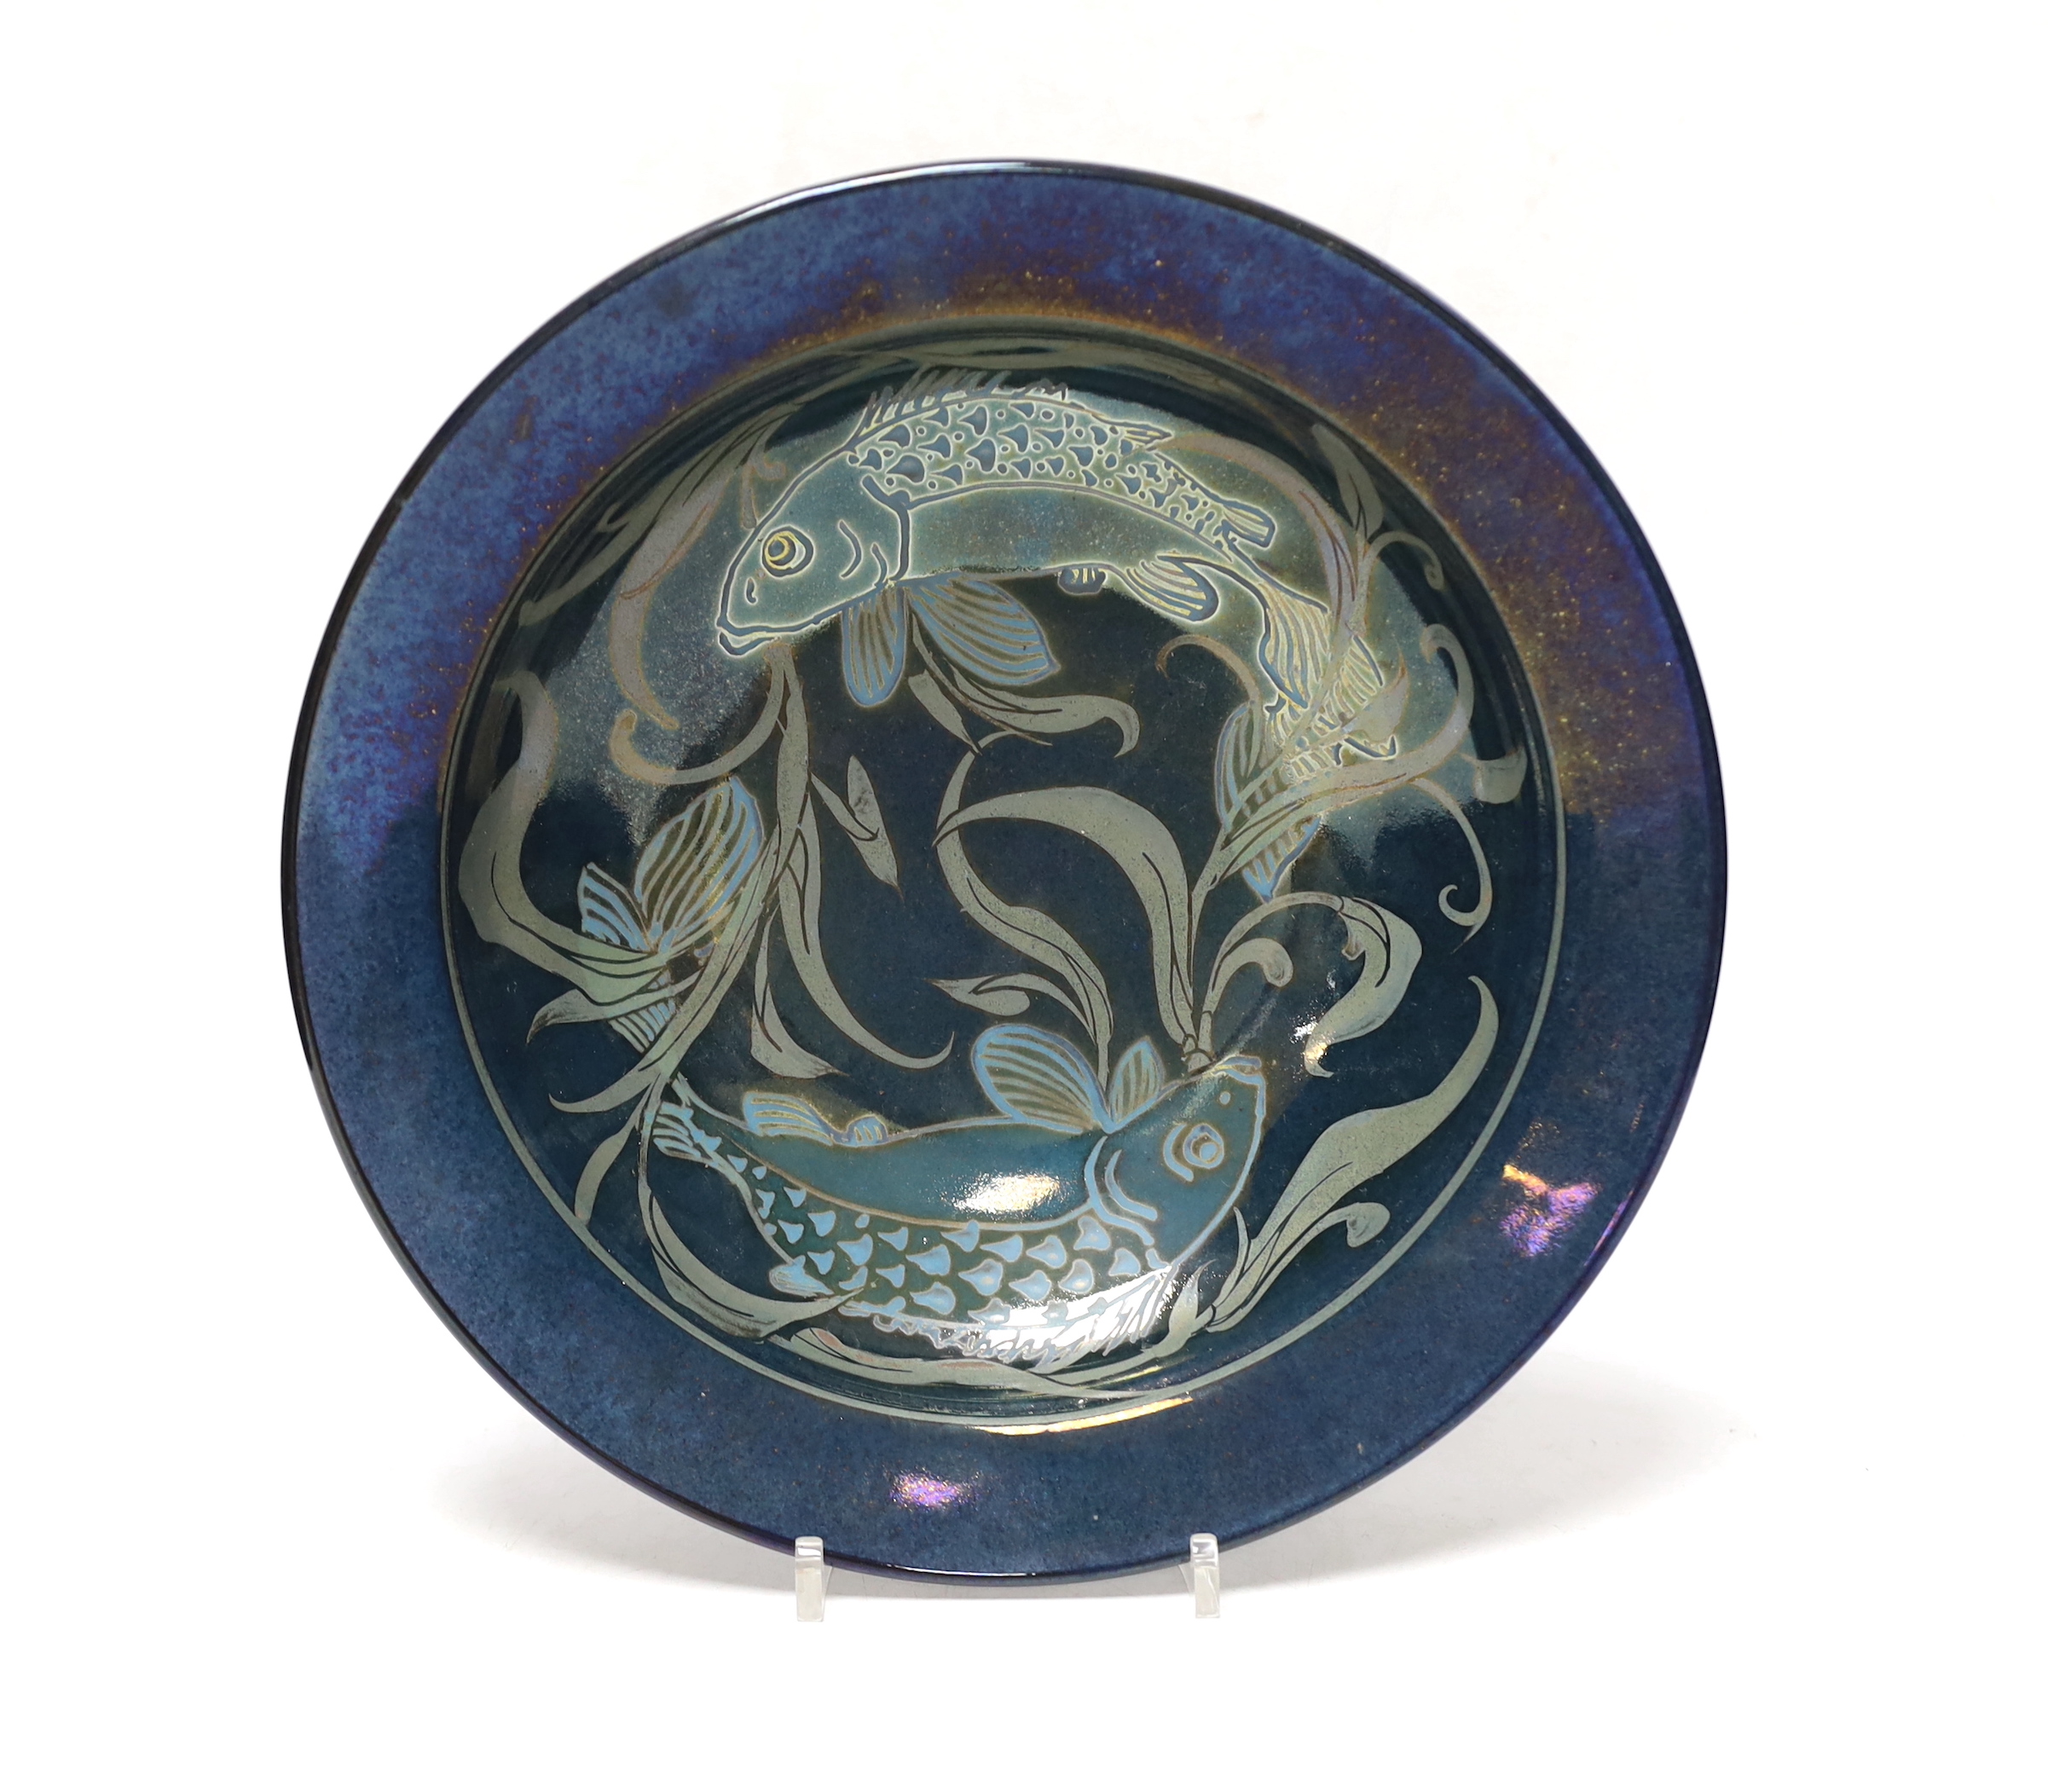 Jonathan Chiswell Jones lustre pottery fish bowl, 27.5cm diameter